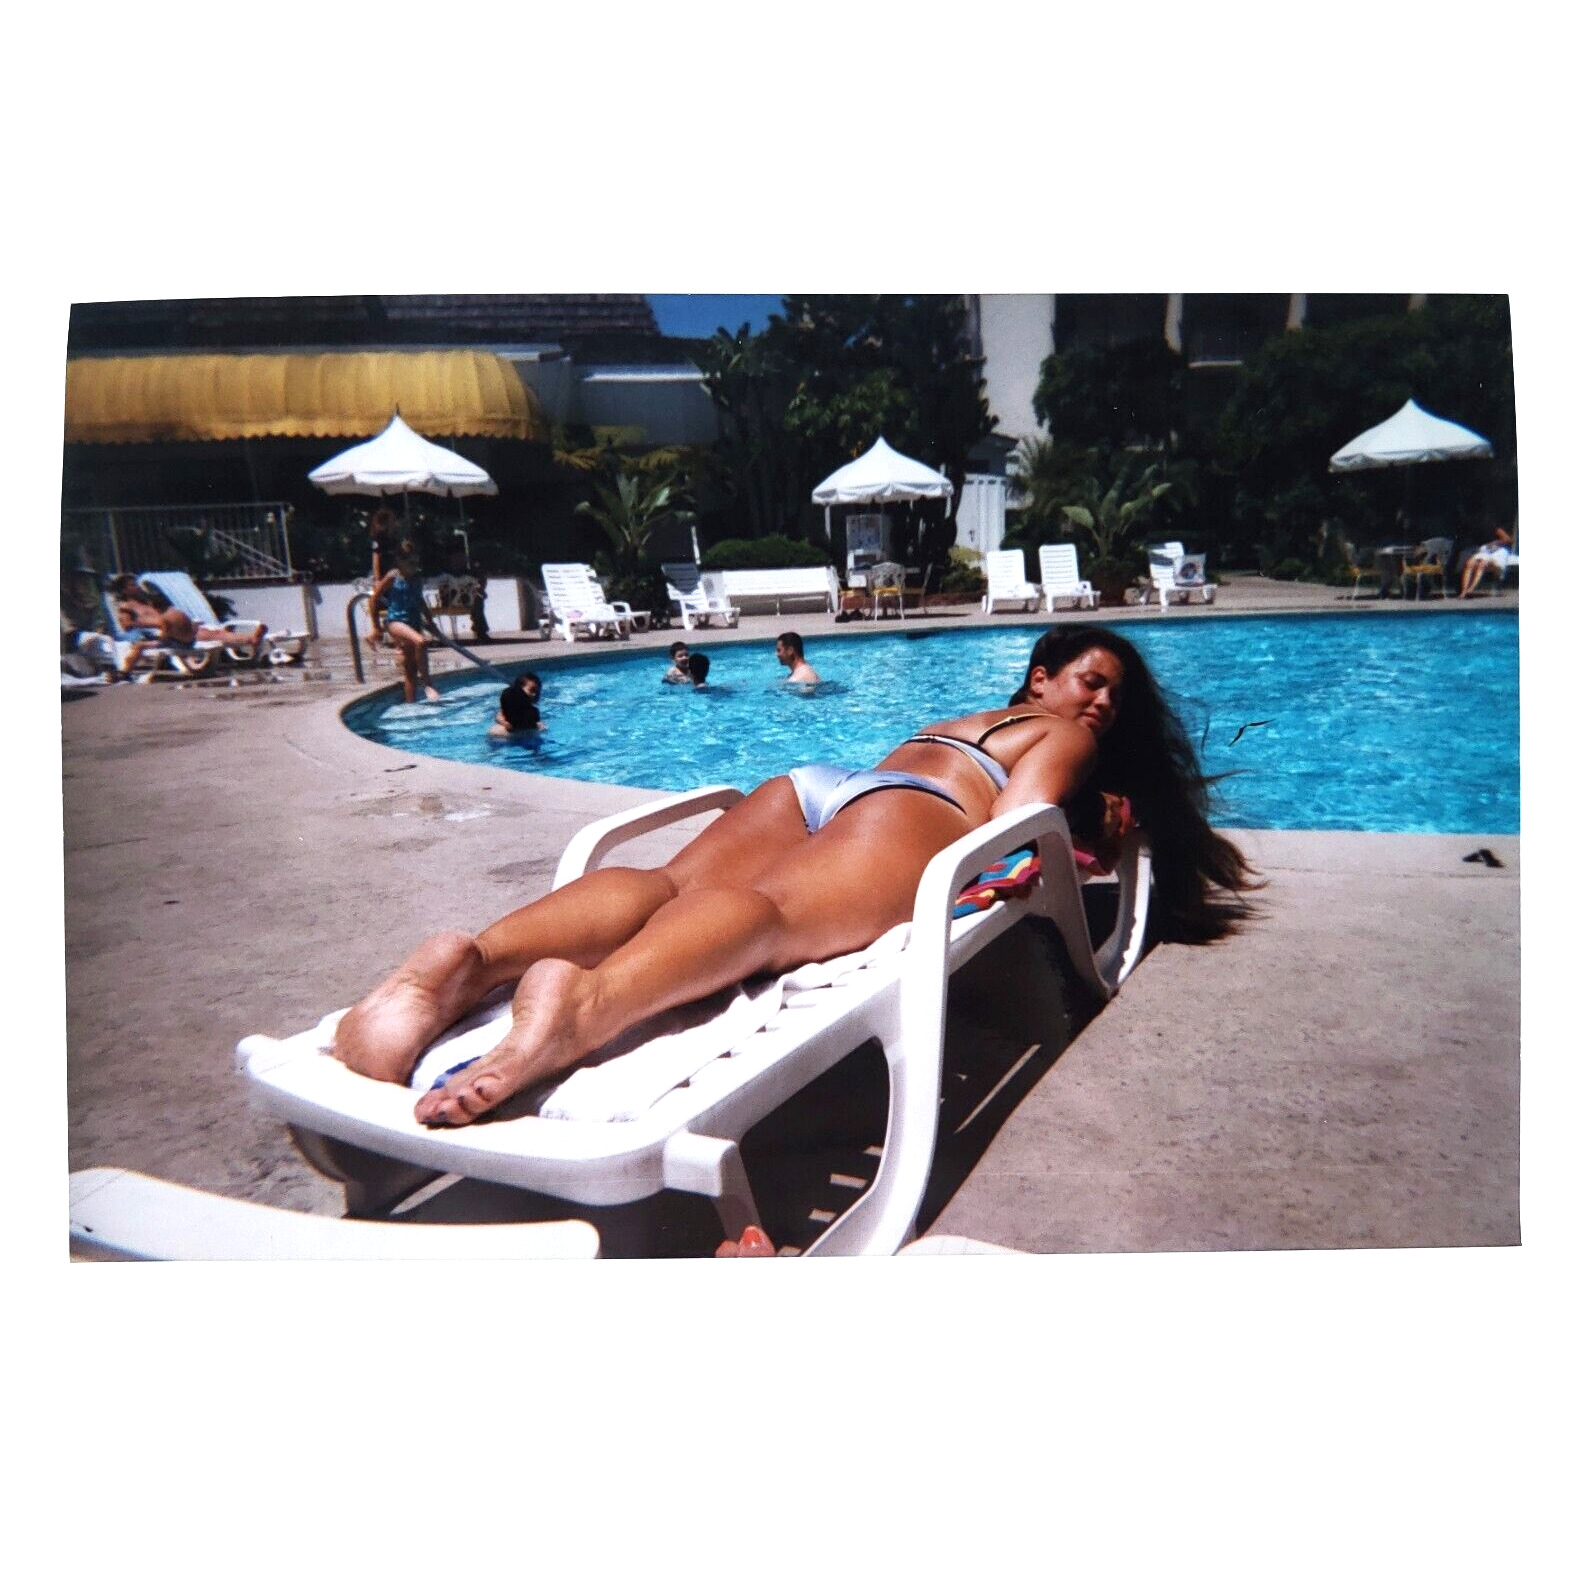 Tan Bottom Bikini Girl Photo Y2K Woman Sun Bathing at Resort Pool Snapshot B3279